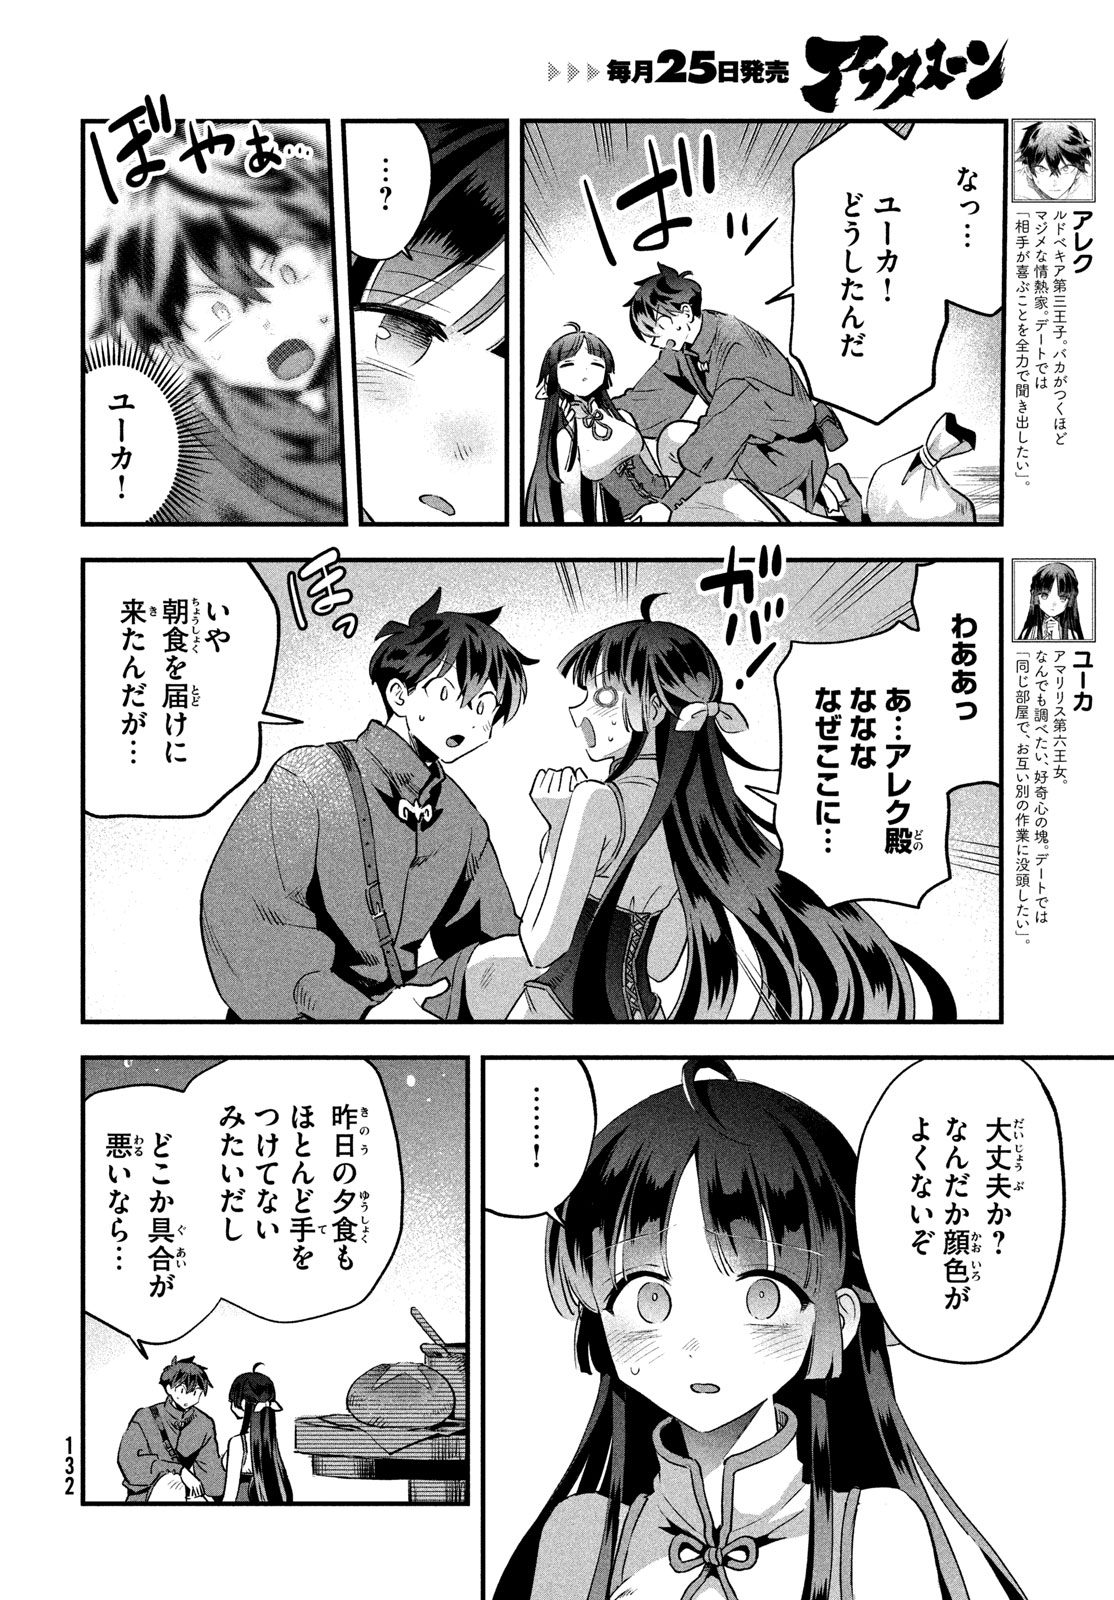 7-nin no Nemuri Hime - Chapter 33 - Page 2